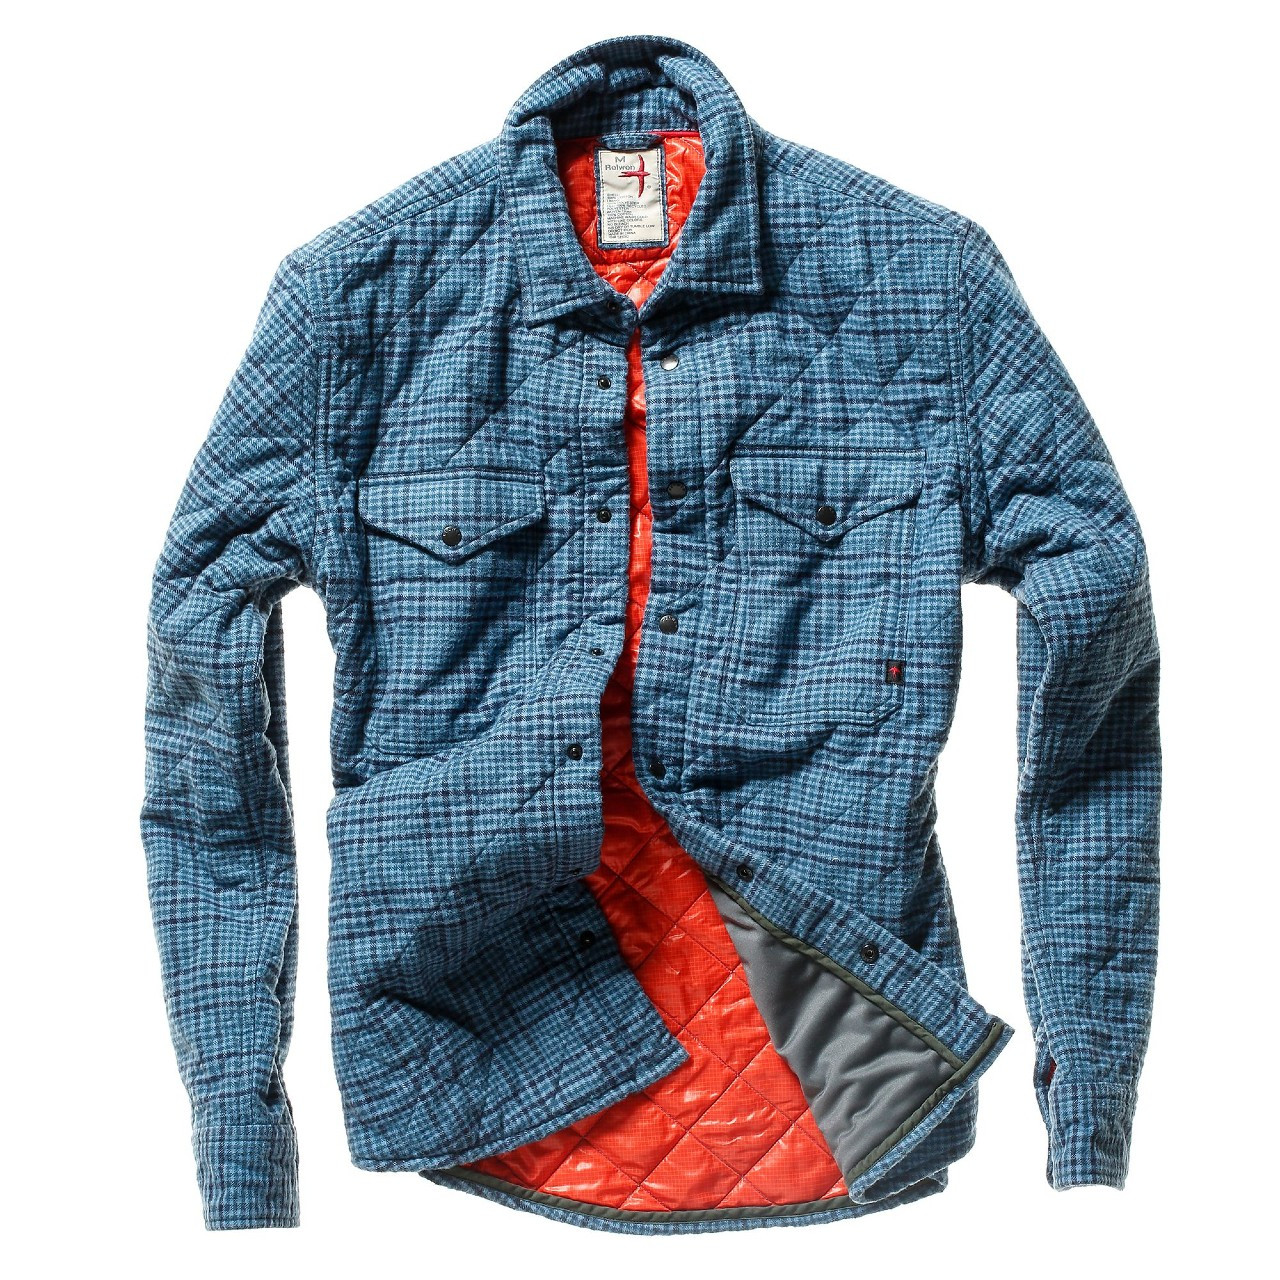 Relwen Quilted Flannel Shirt Jacket - Weitzenkorns